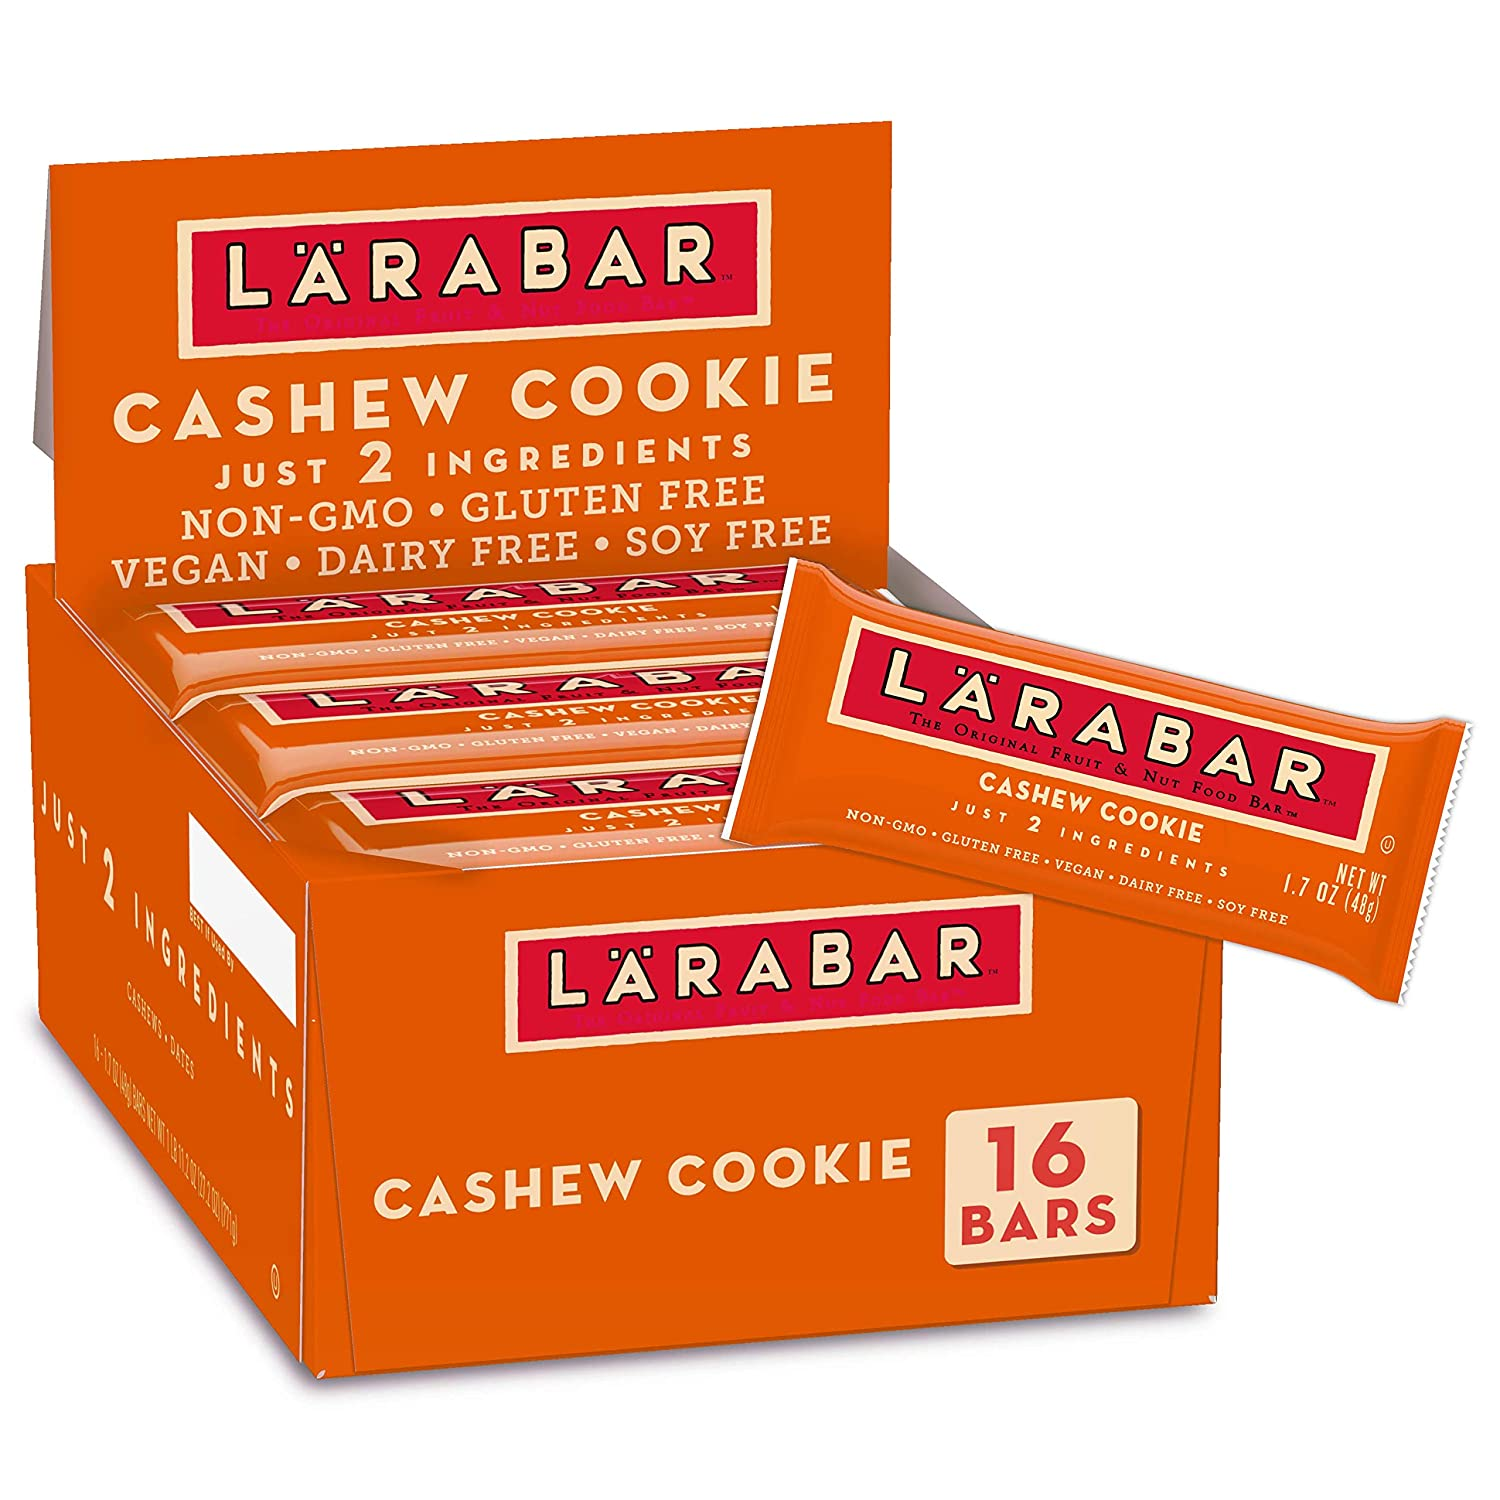 Larabar Fruit and Nut Bar, Cashew Cookie, Gluten Free, 16 ct, 27.2 oz: Amazon.com: Grocery & Gourmet Food $12.42